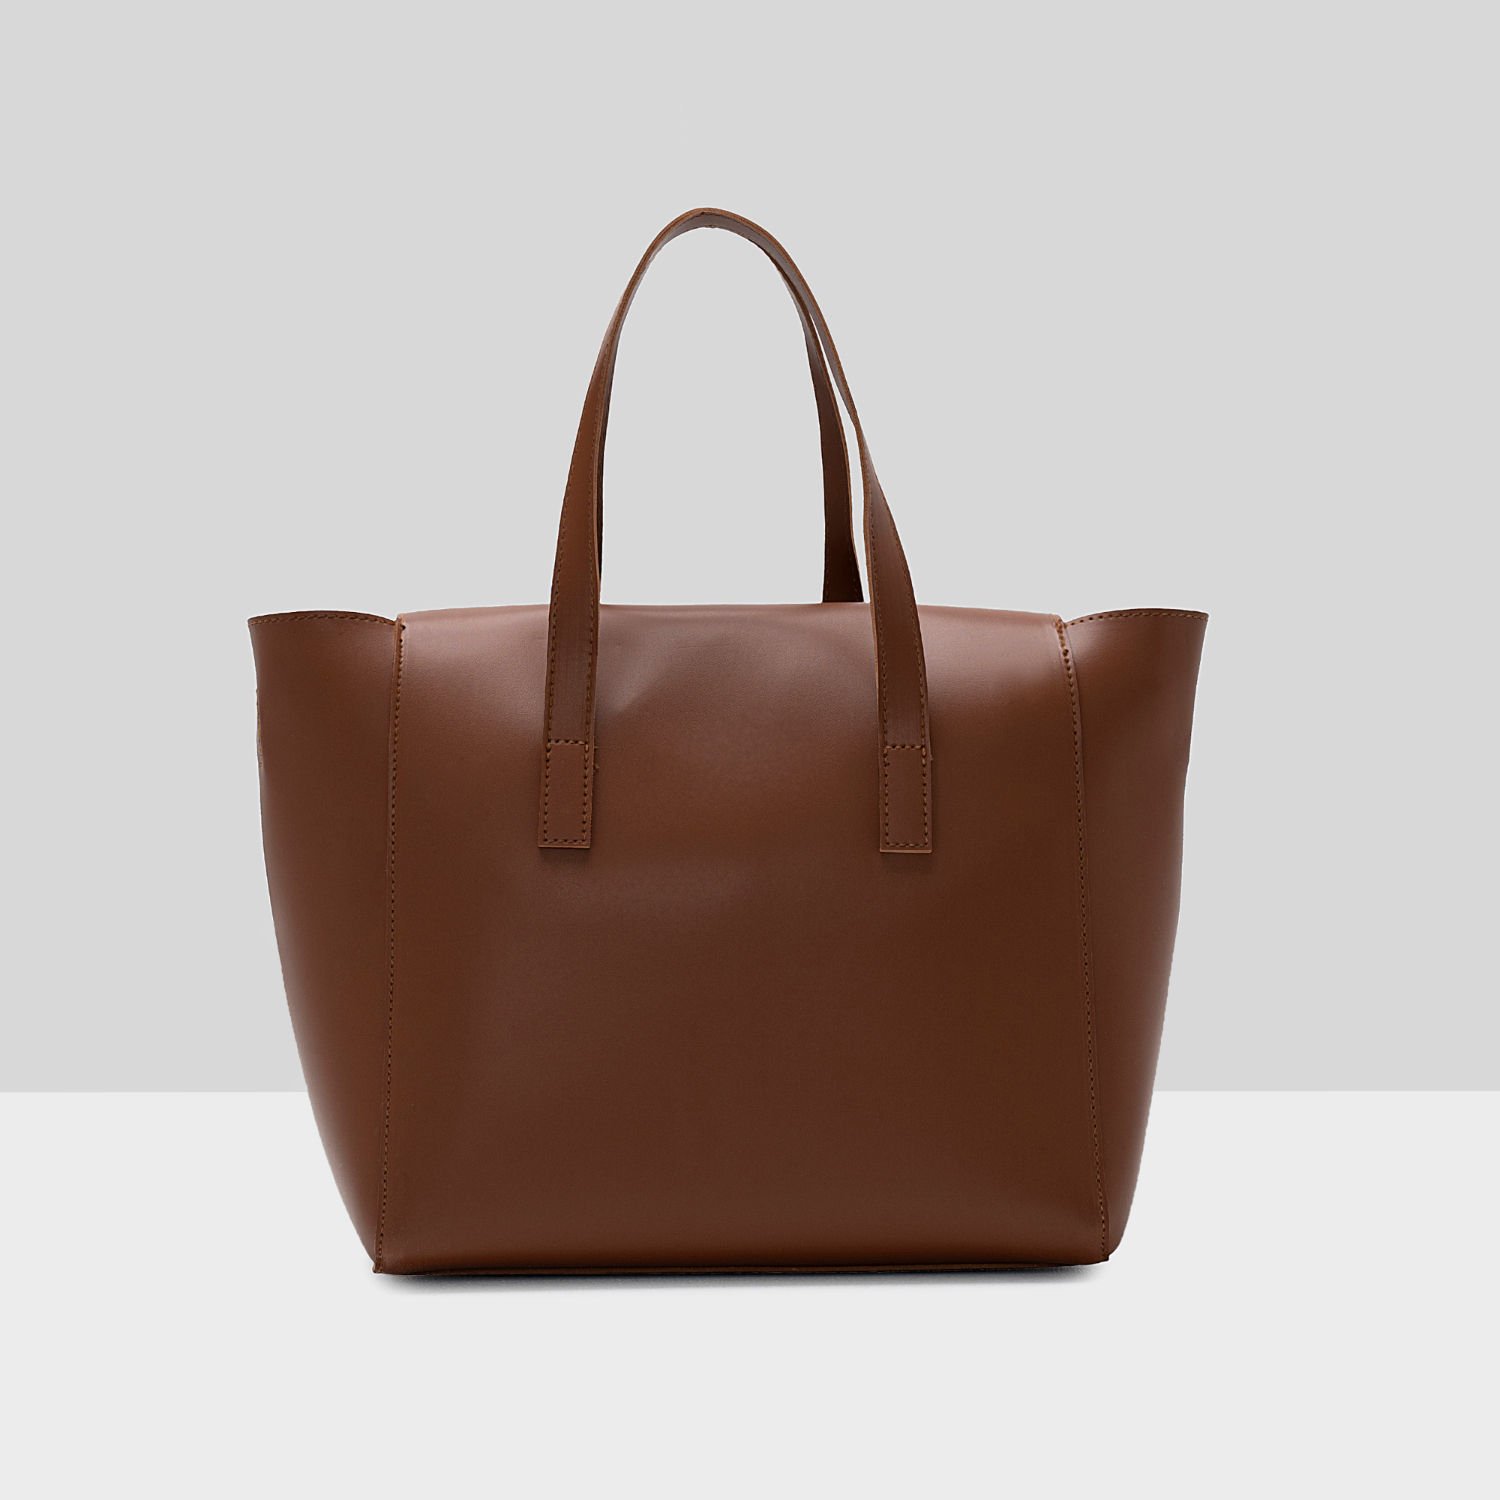 Buy MIRAGGIO Briella Womens Brown Tote Bag Online